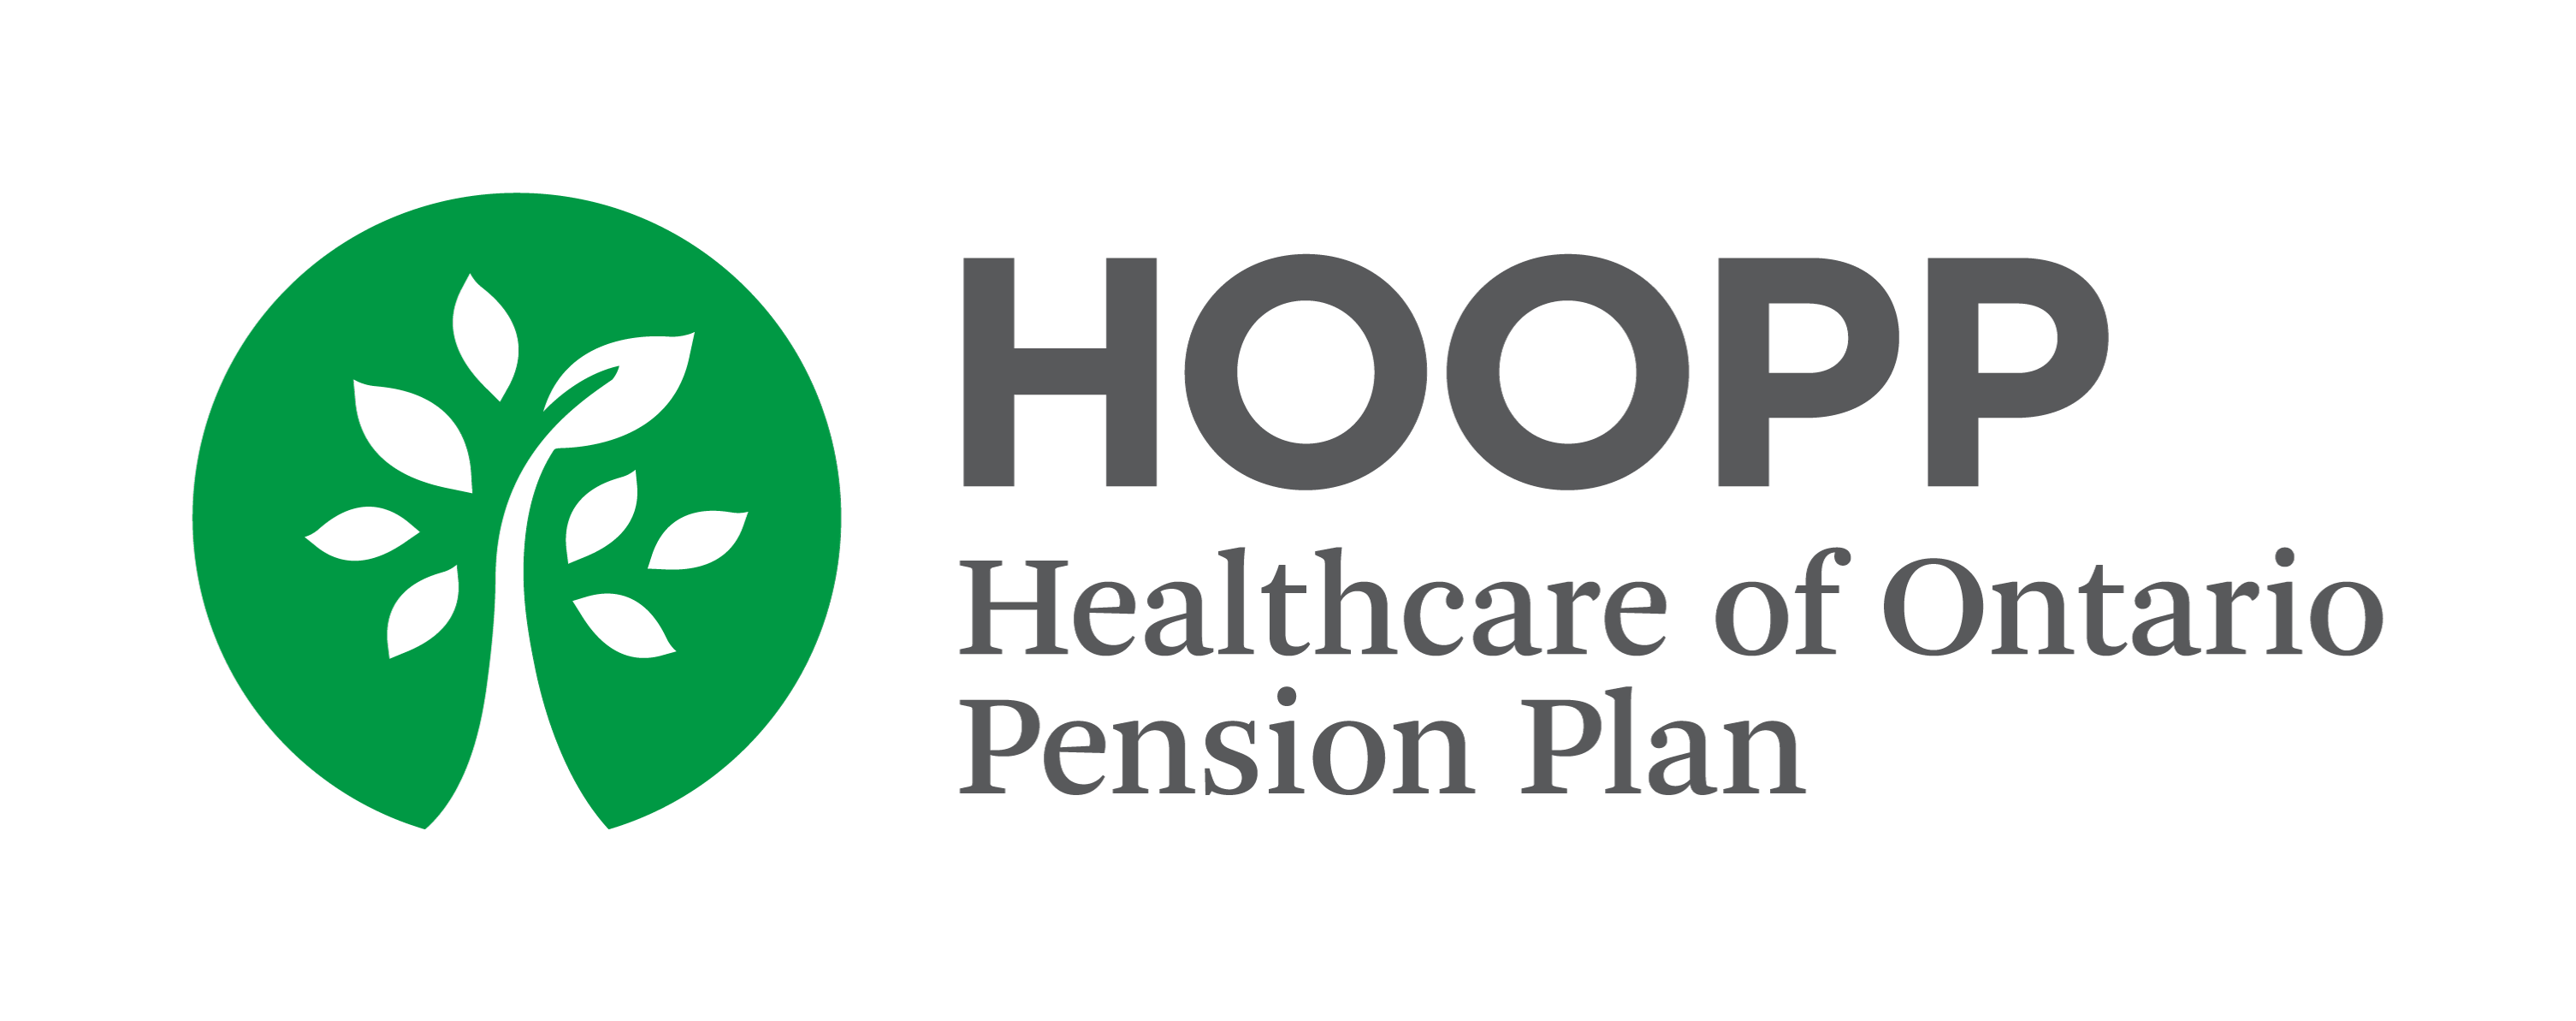 HOOPP logo